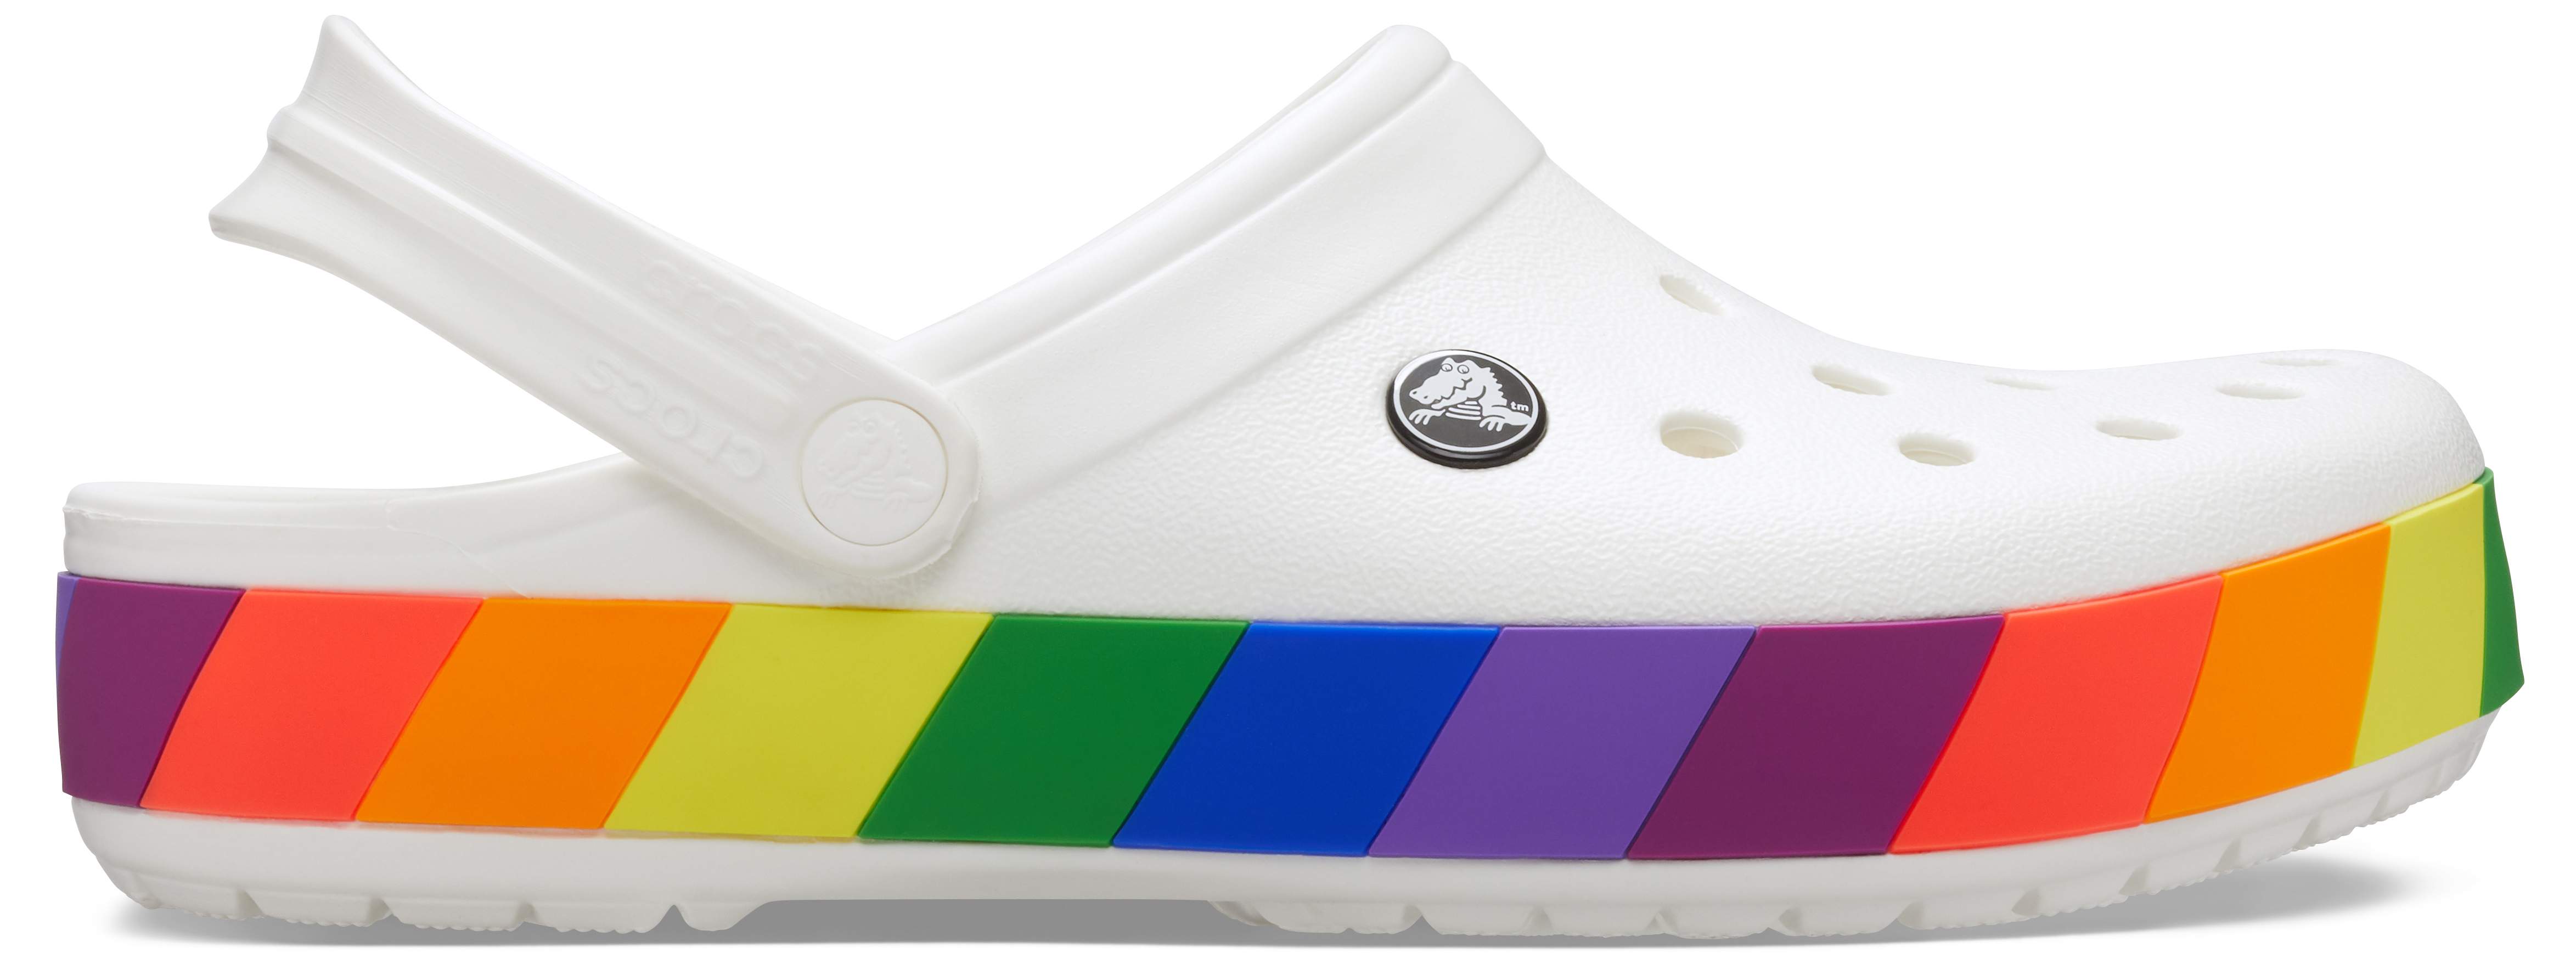 crocs white and rainbow